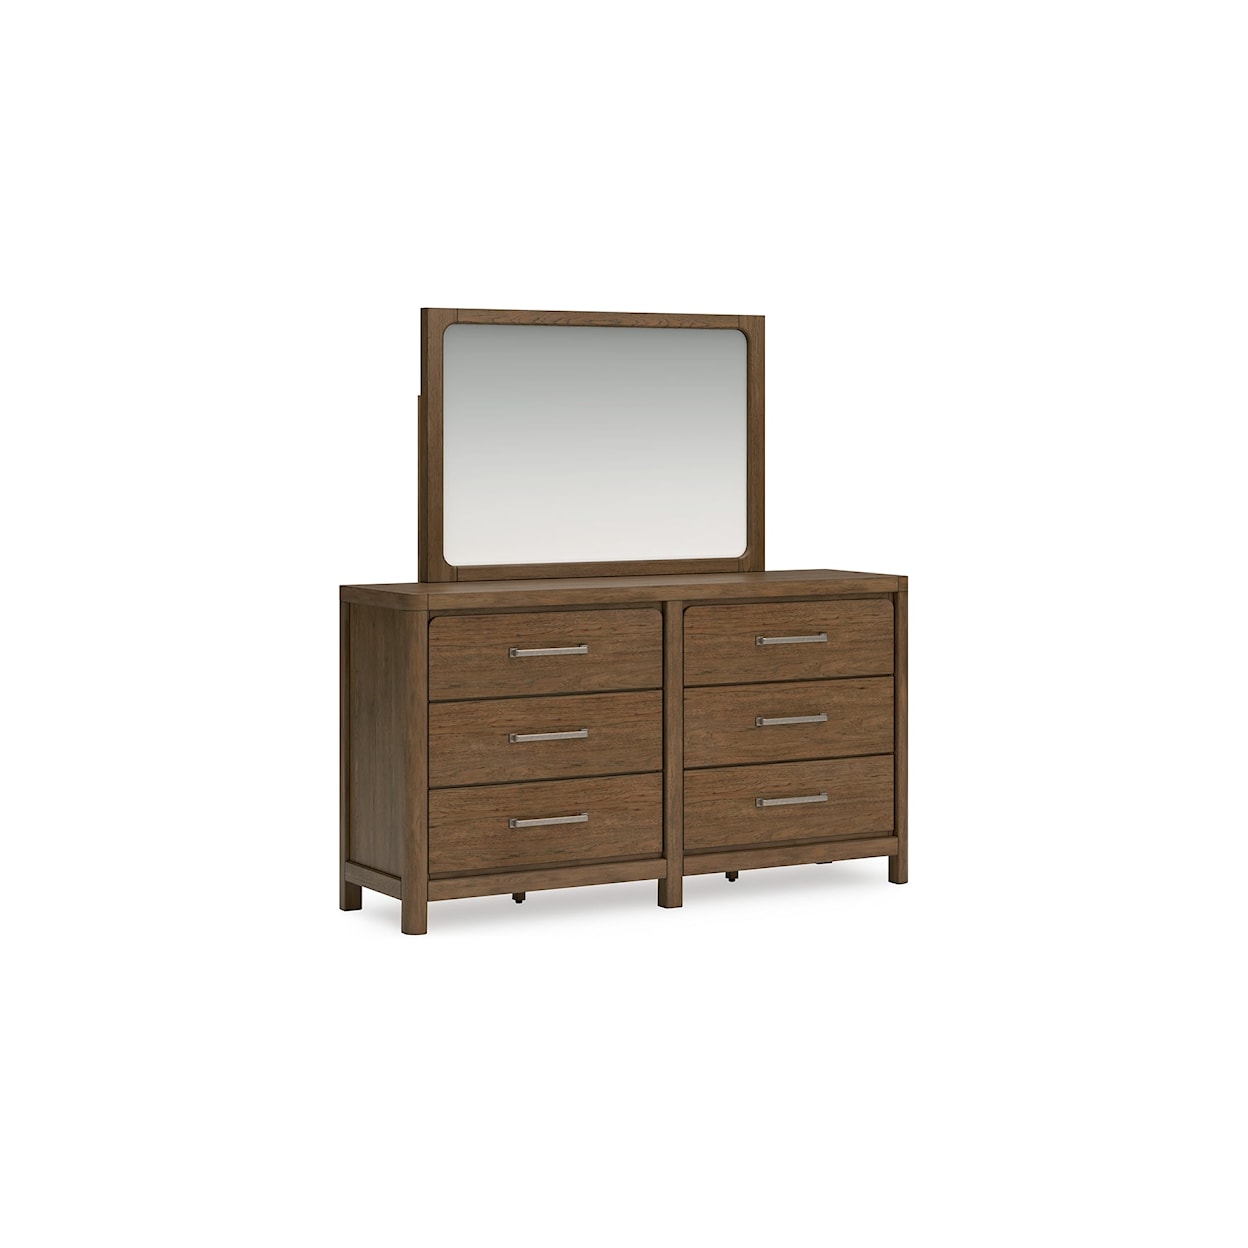 Signature Design Cabalynn Dresser and Mirror Set